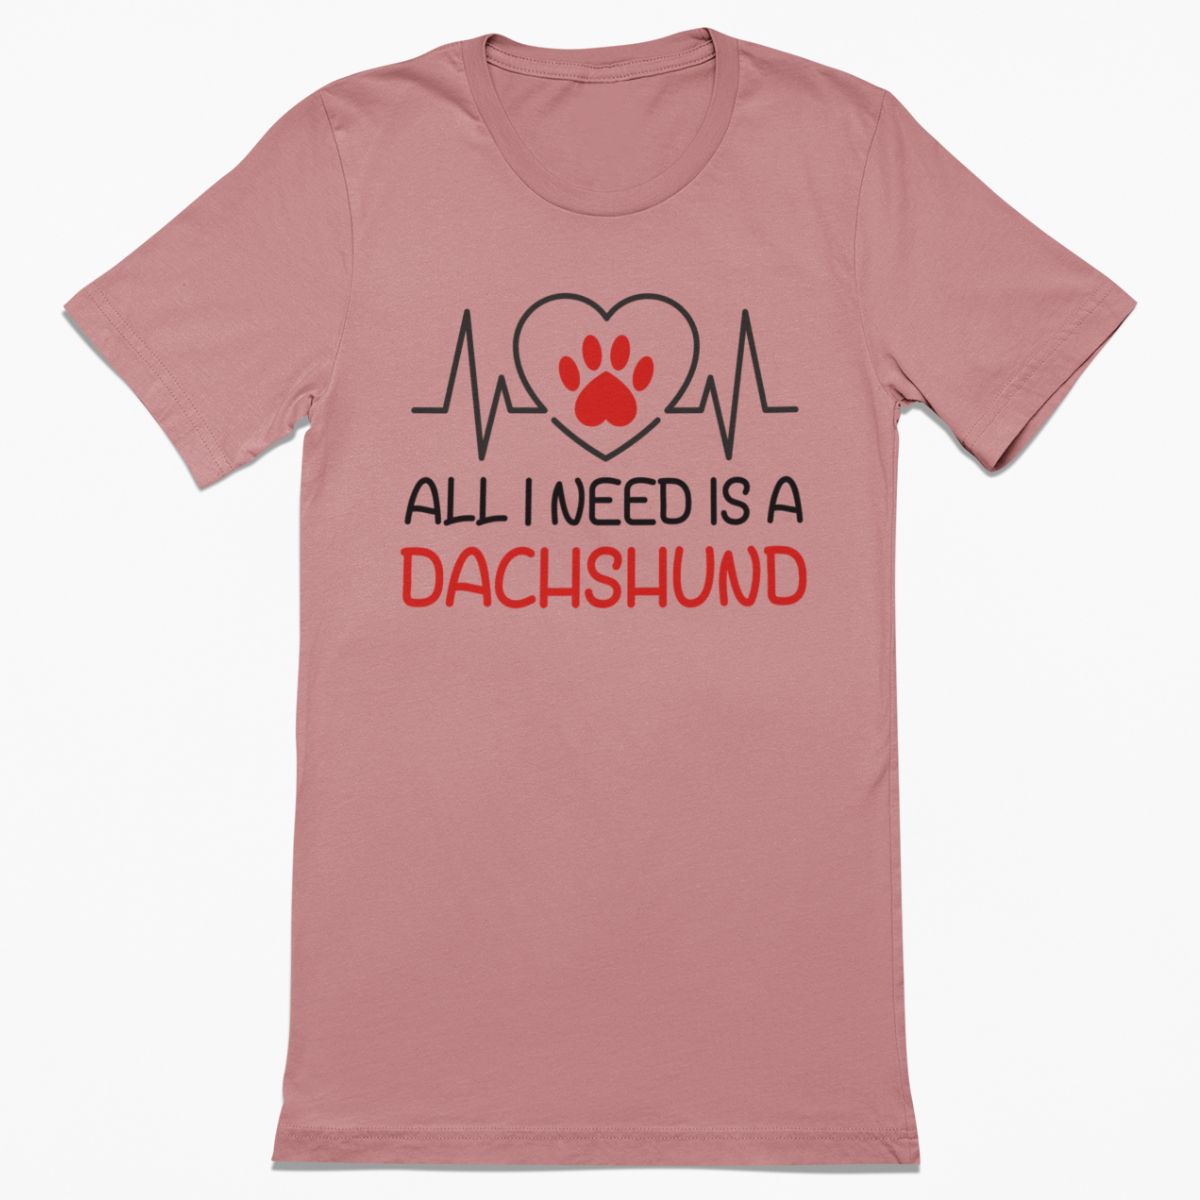 All I Need is a Dachshund Shirt